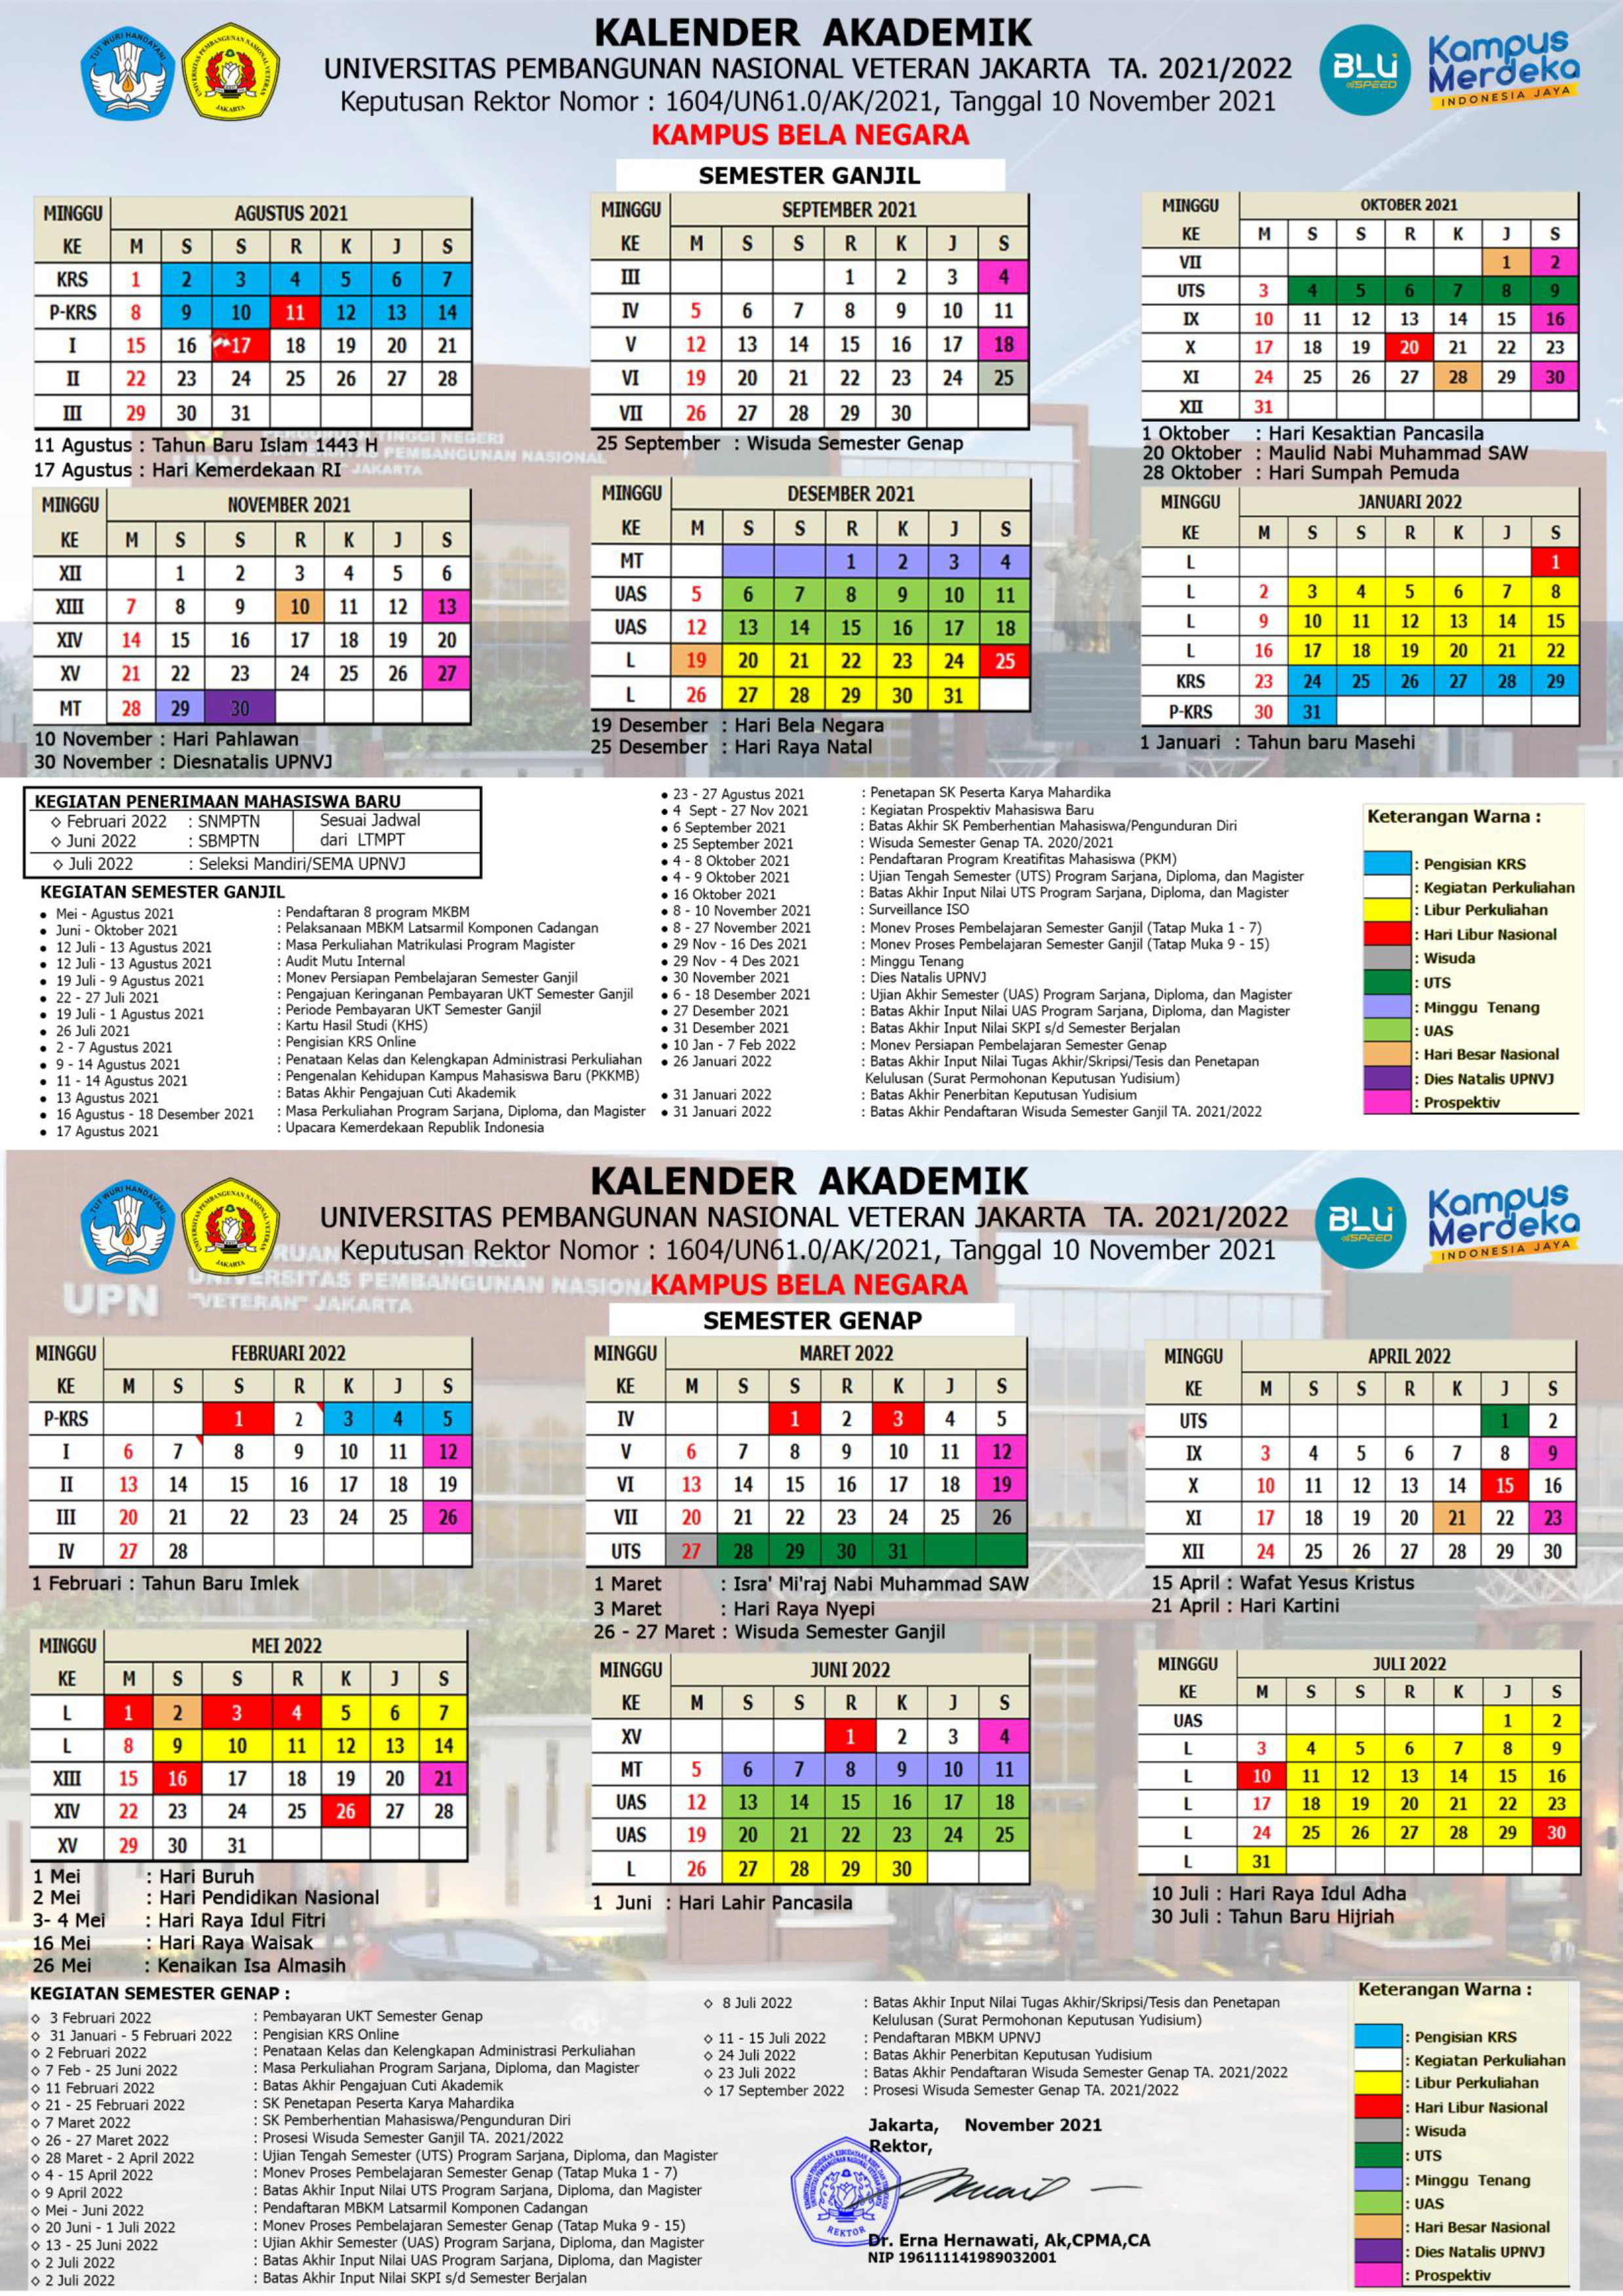 Kalender Akademik.jpg